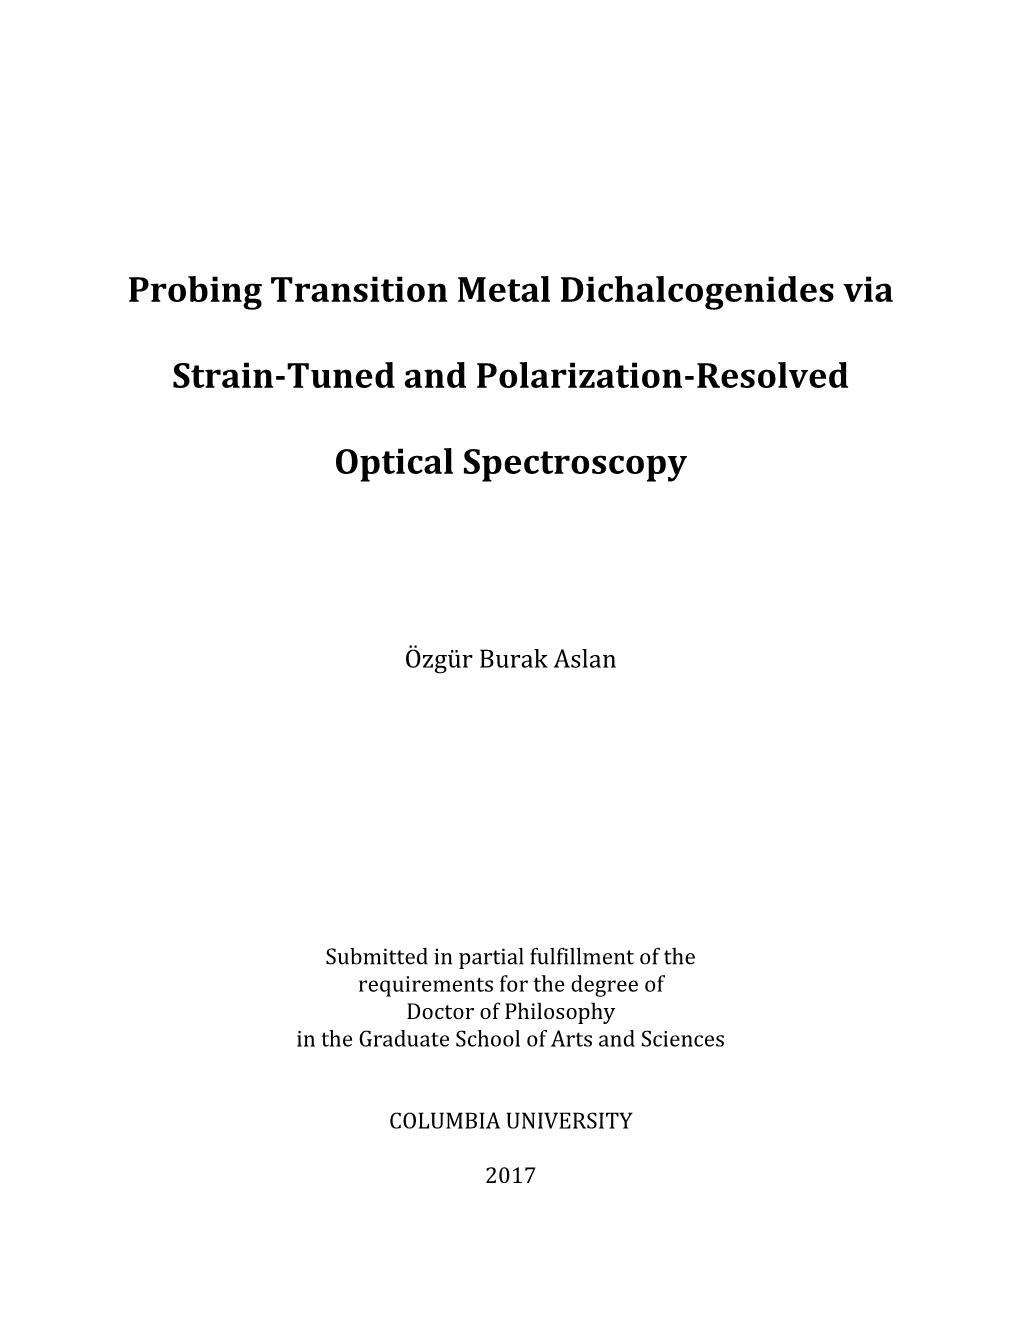 Probing Transition Metal Dichalcogenides Via Strain-Tuned And